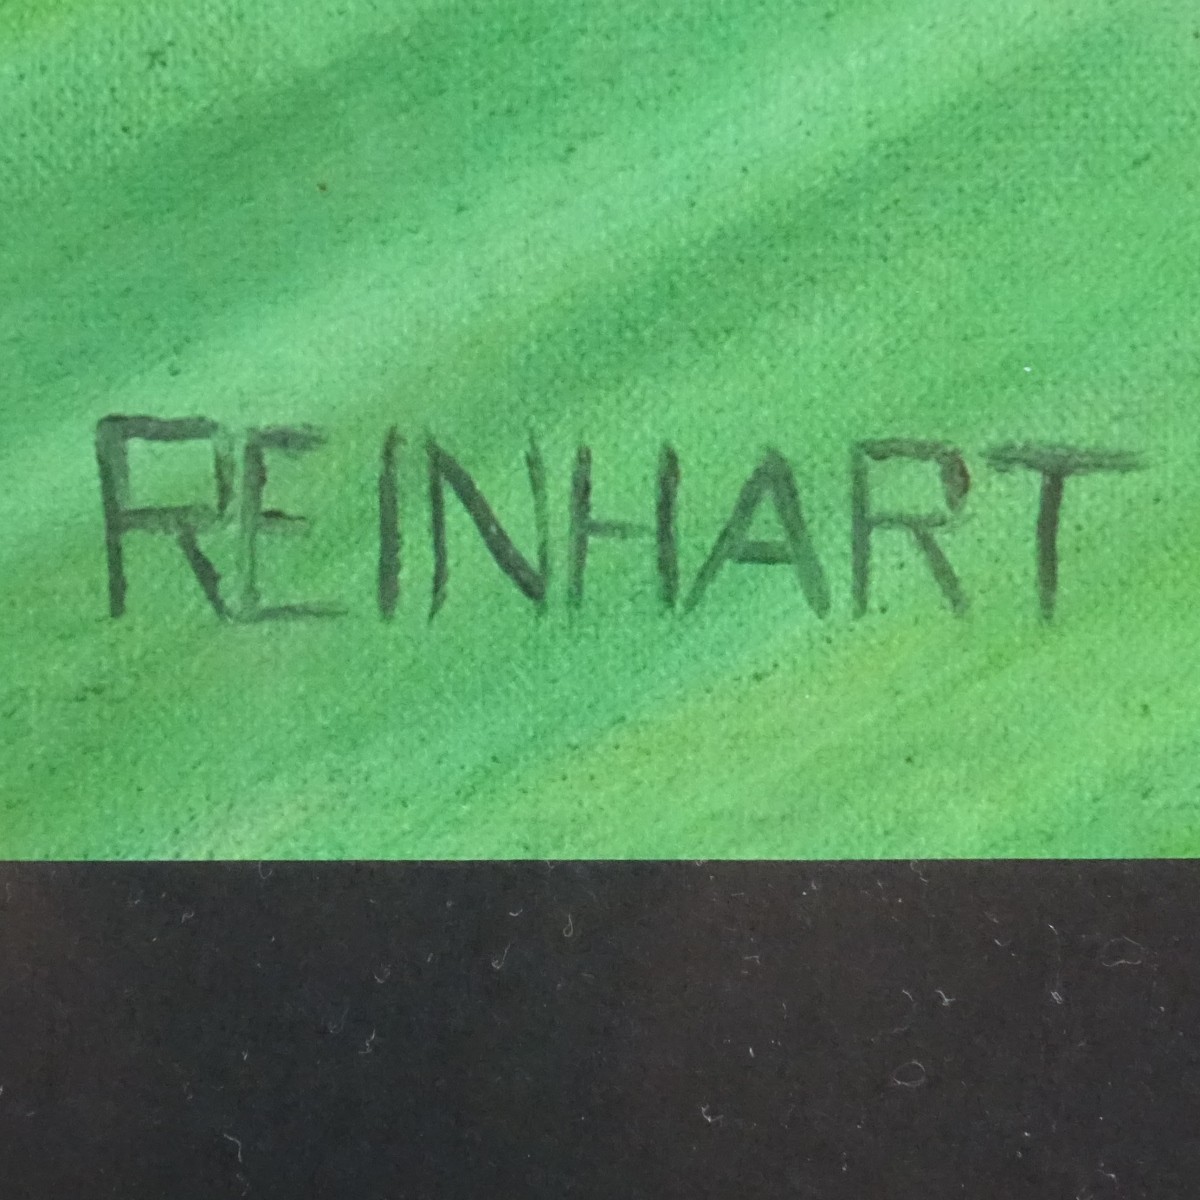 Reinhart (20th C.)